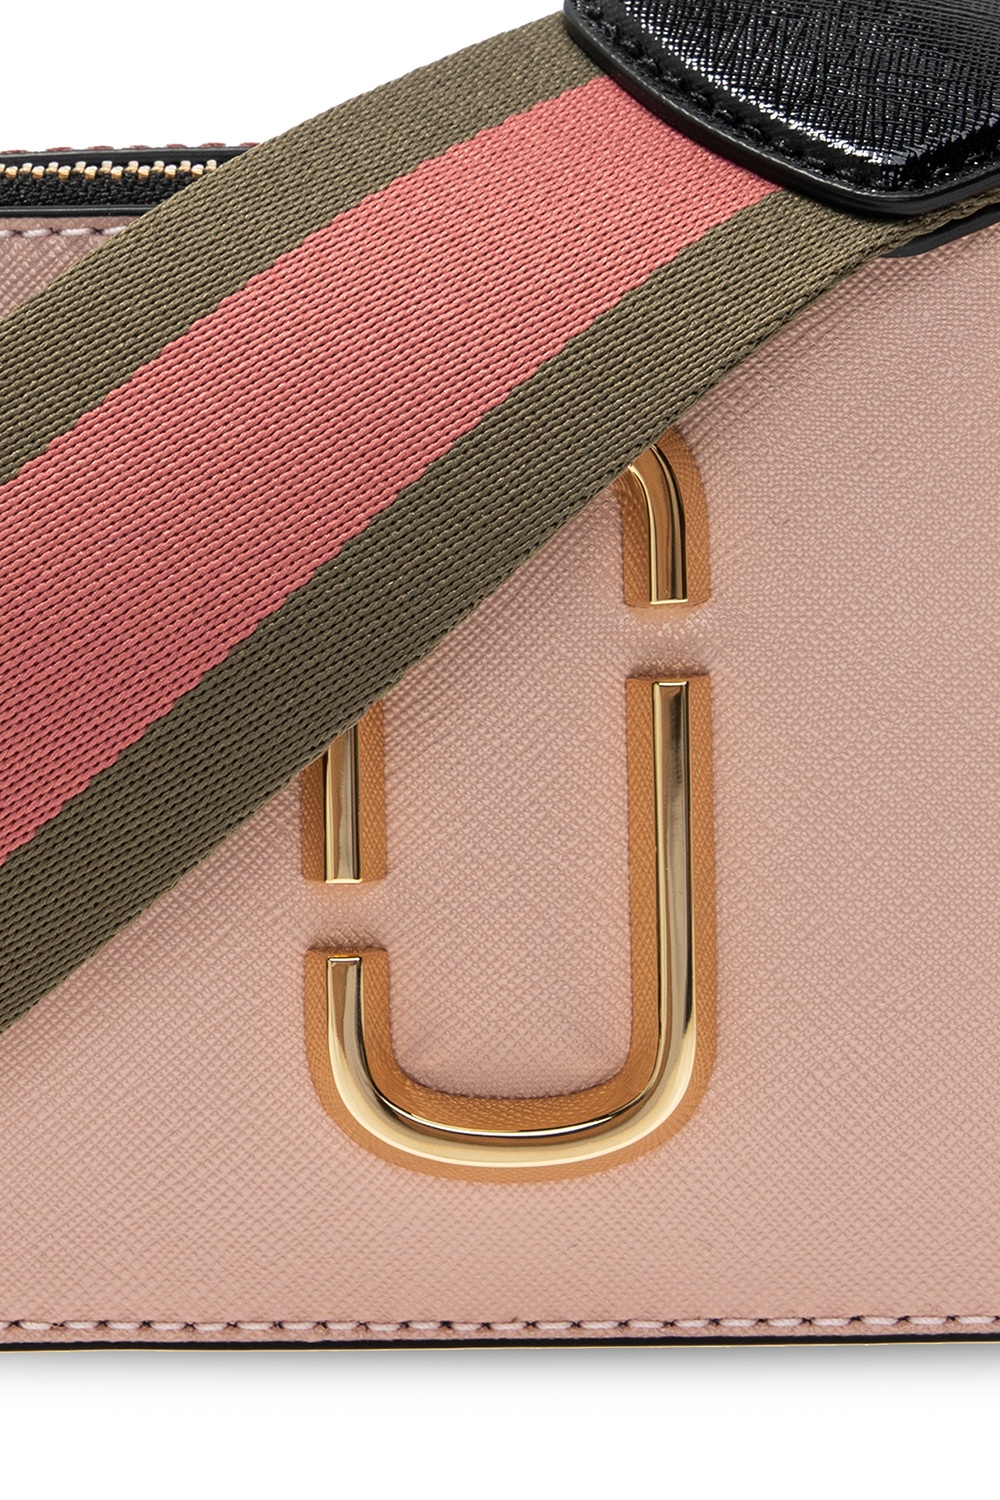 Marc Jacobs ‘The Snapshot Small’ Shoulder Bag Women's Pink | Vitkac